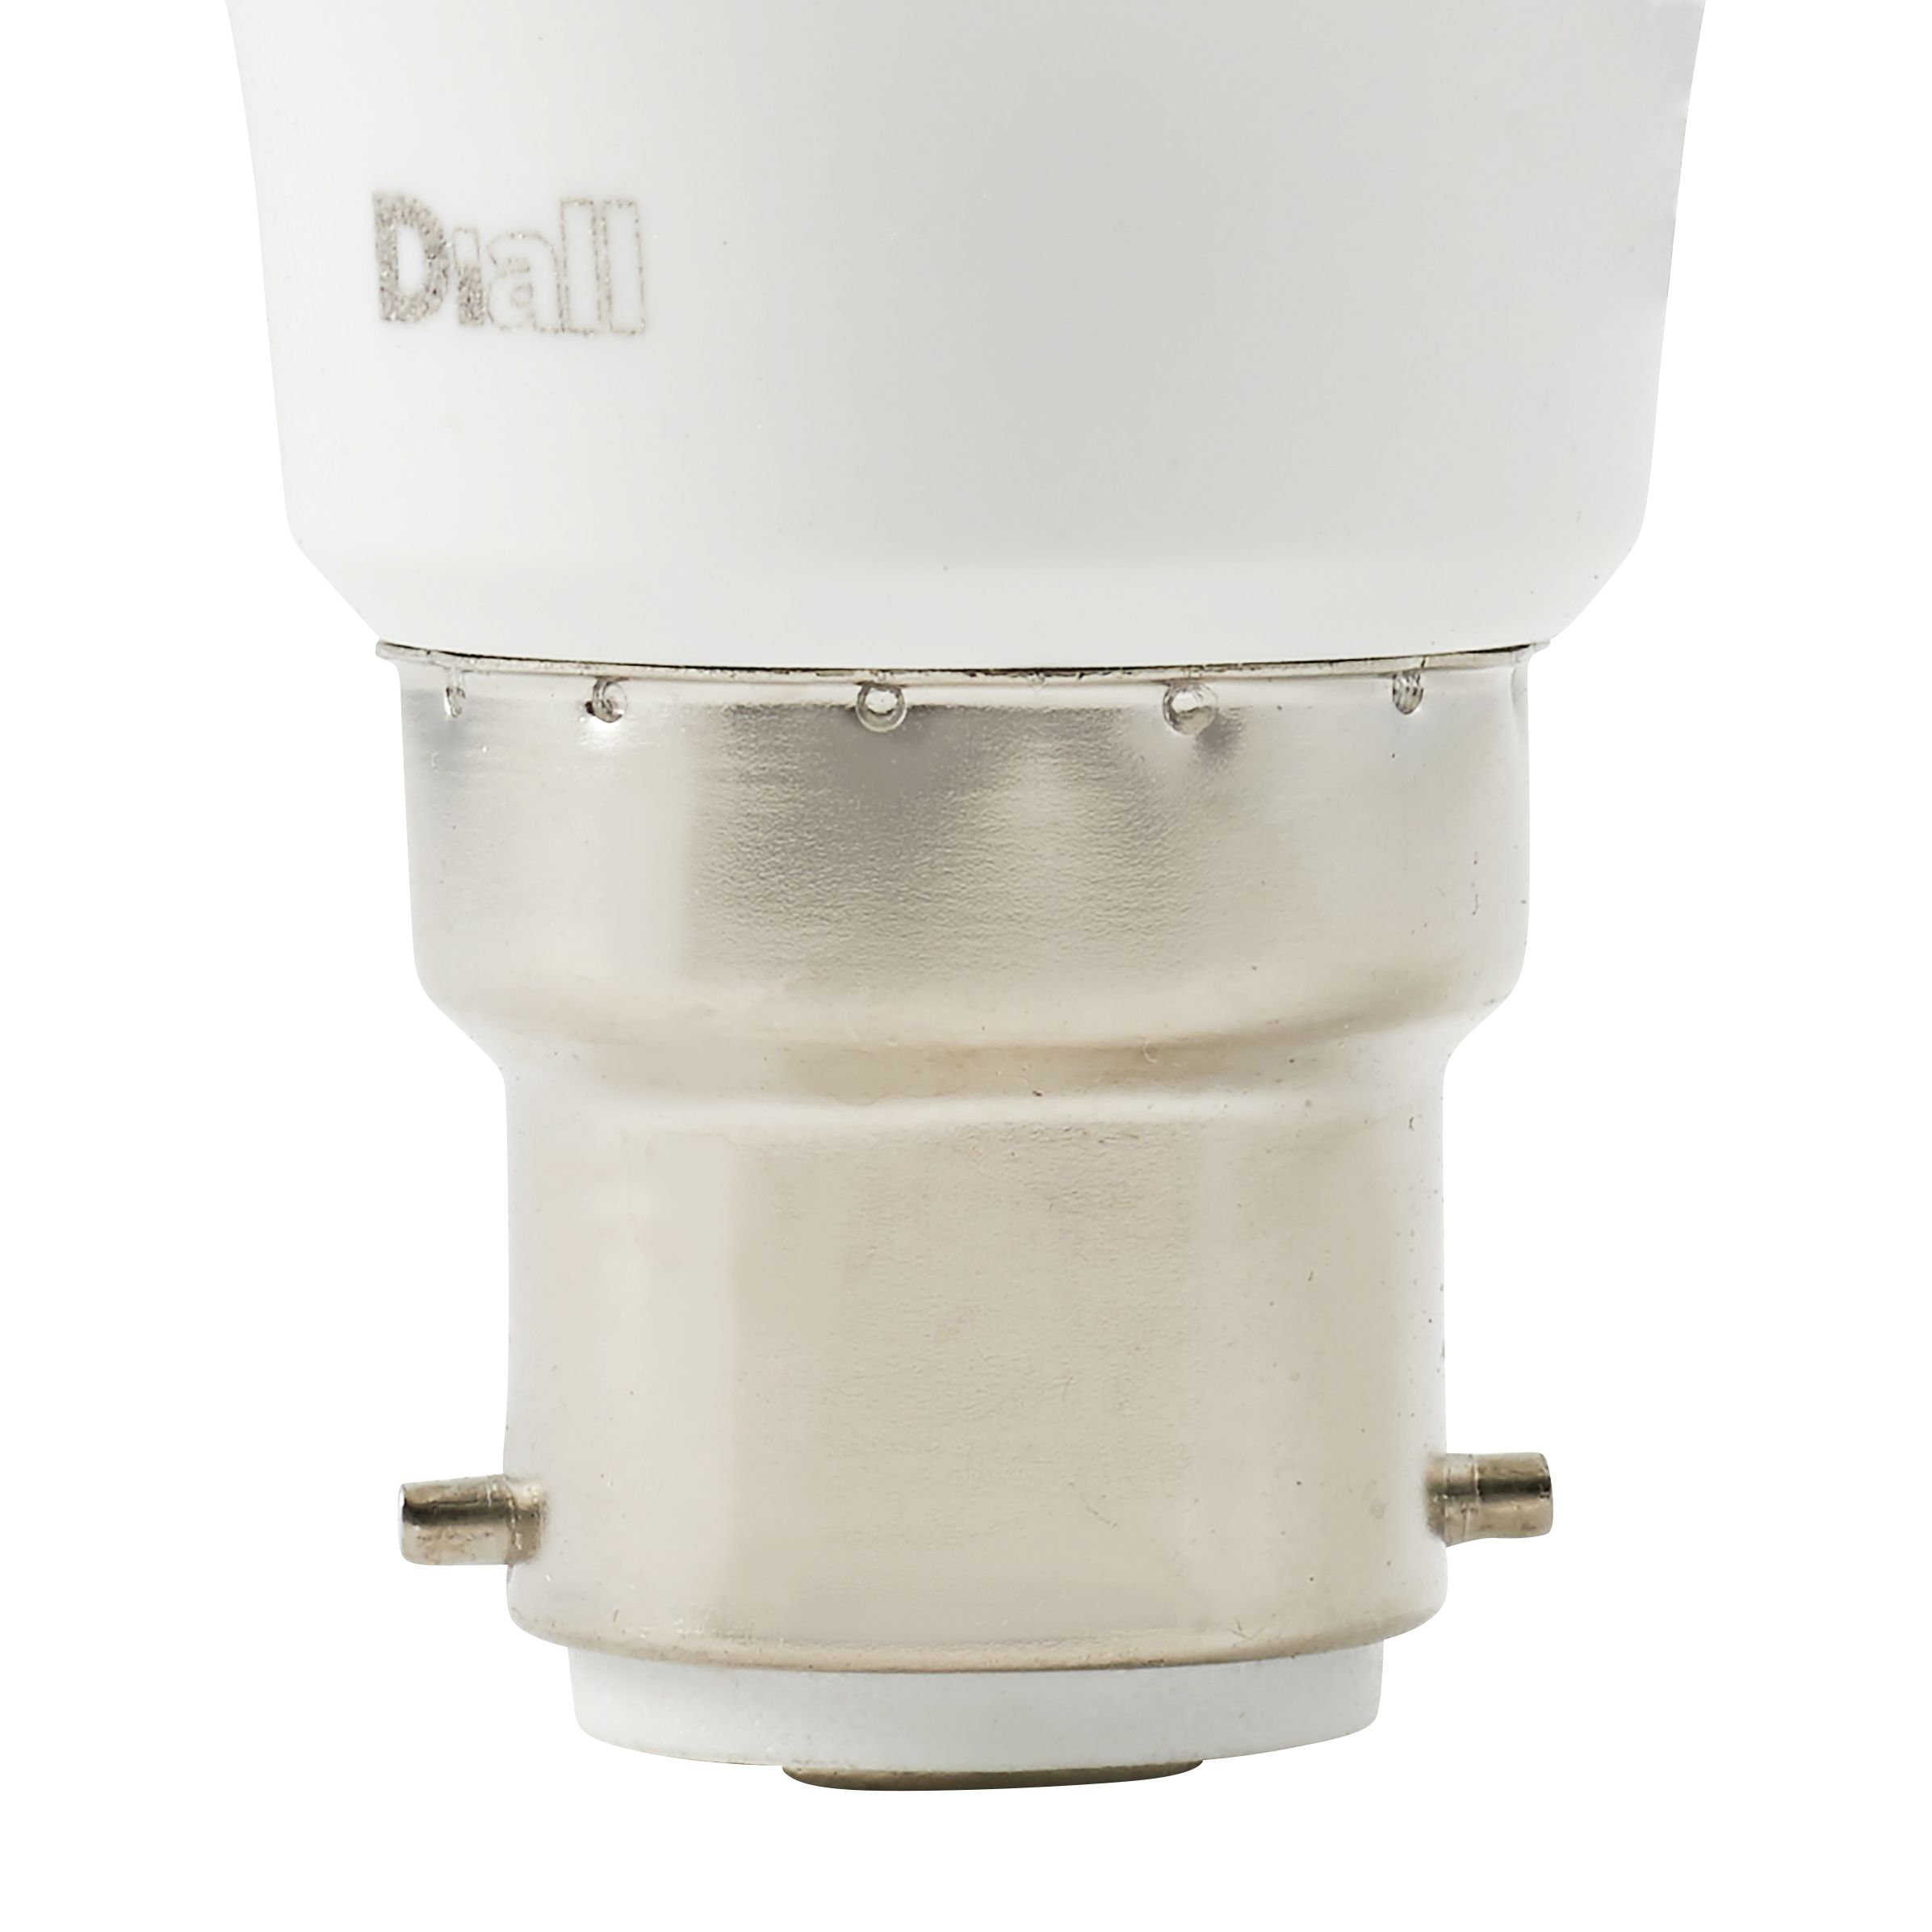 Diall B22 13.8W 1521lm White A60 Warm white LED Light bulb